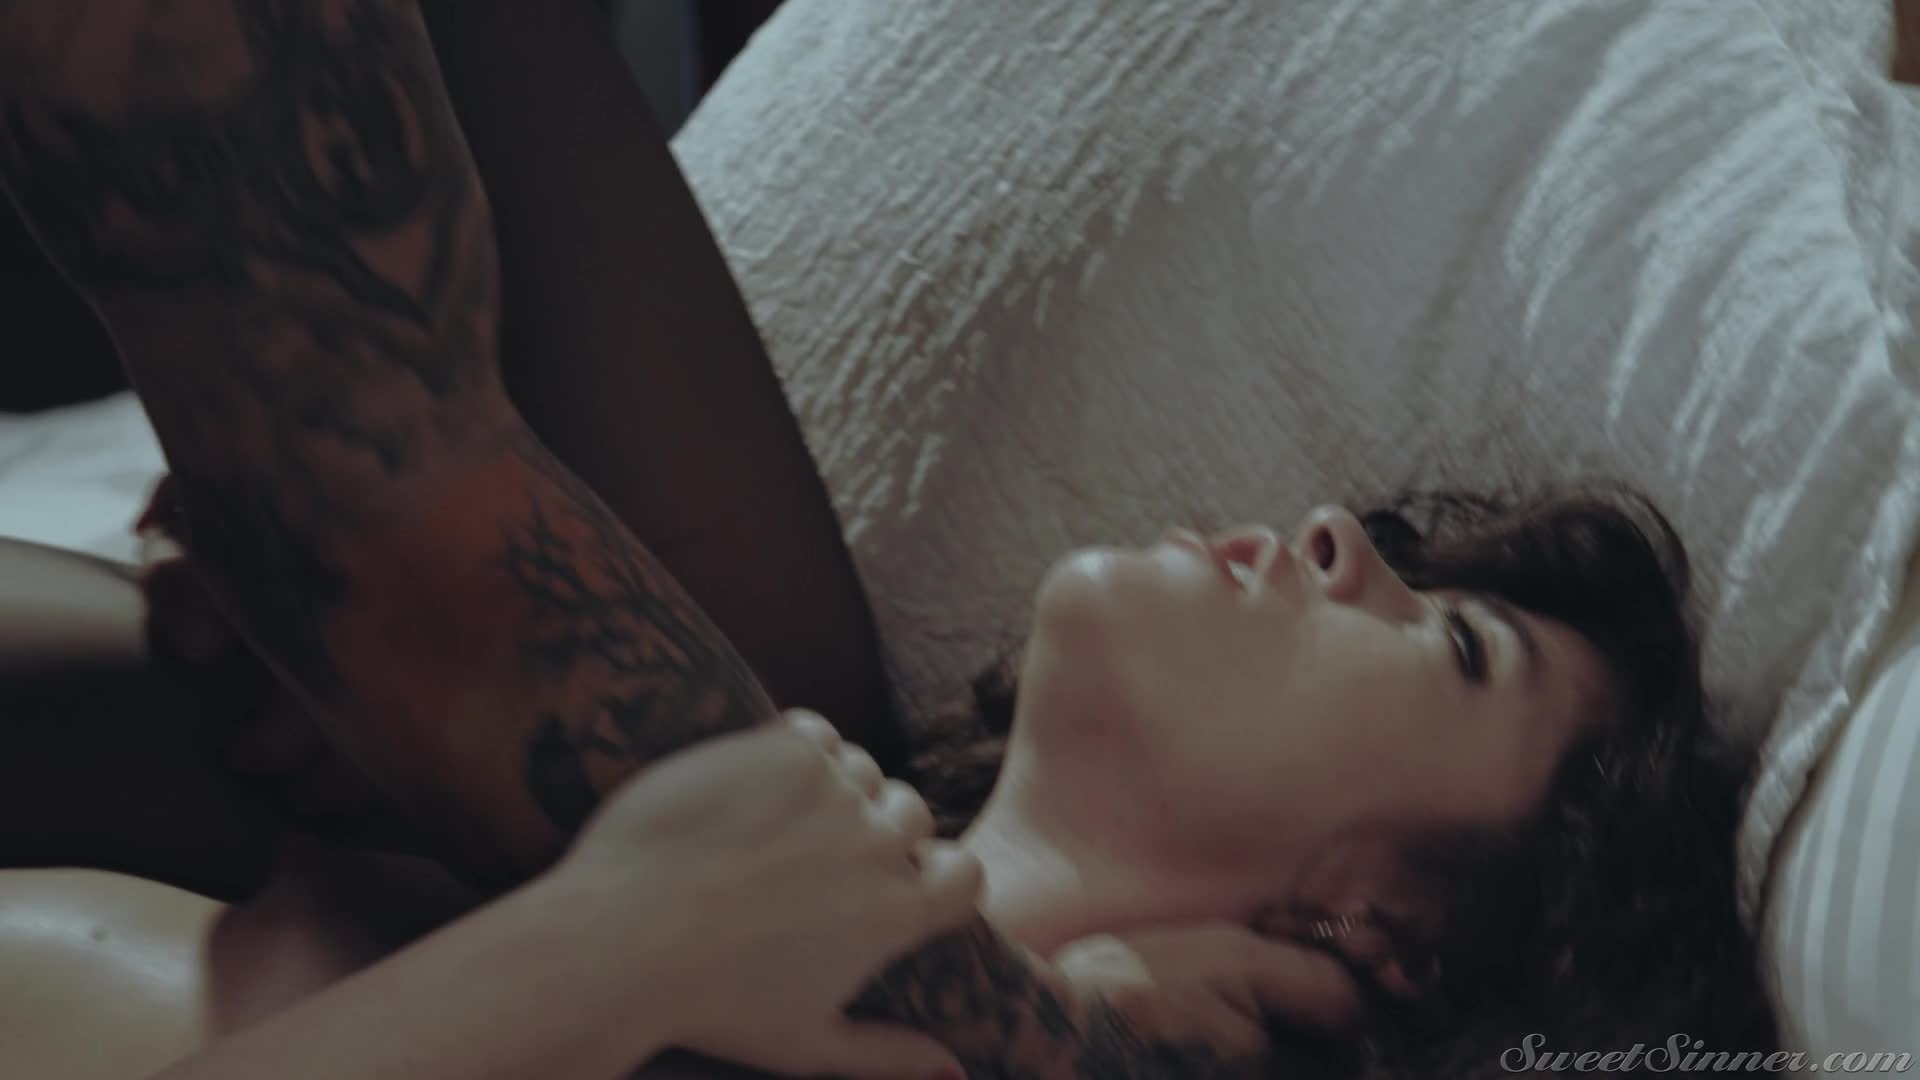 Victoria Voxxx - The Sex Therapist 6 - Scene 2 - Up Close And Personal [FullHD 1080p]